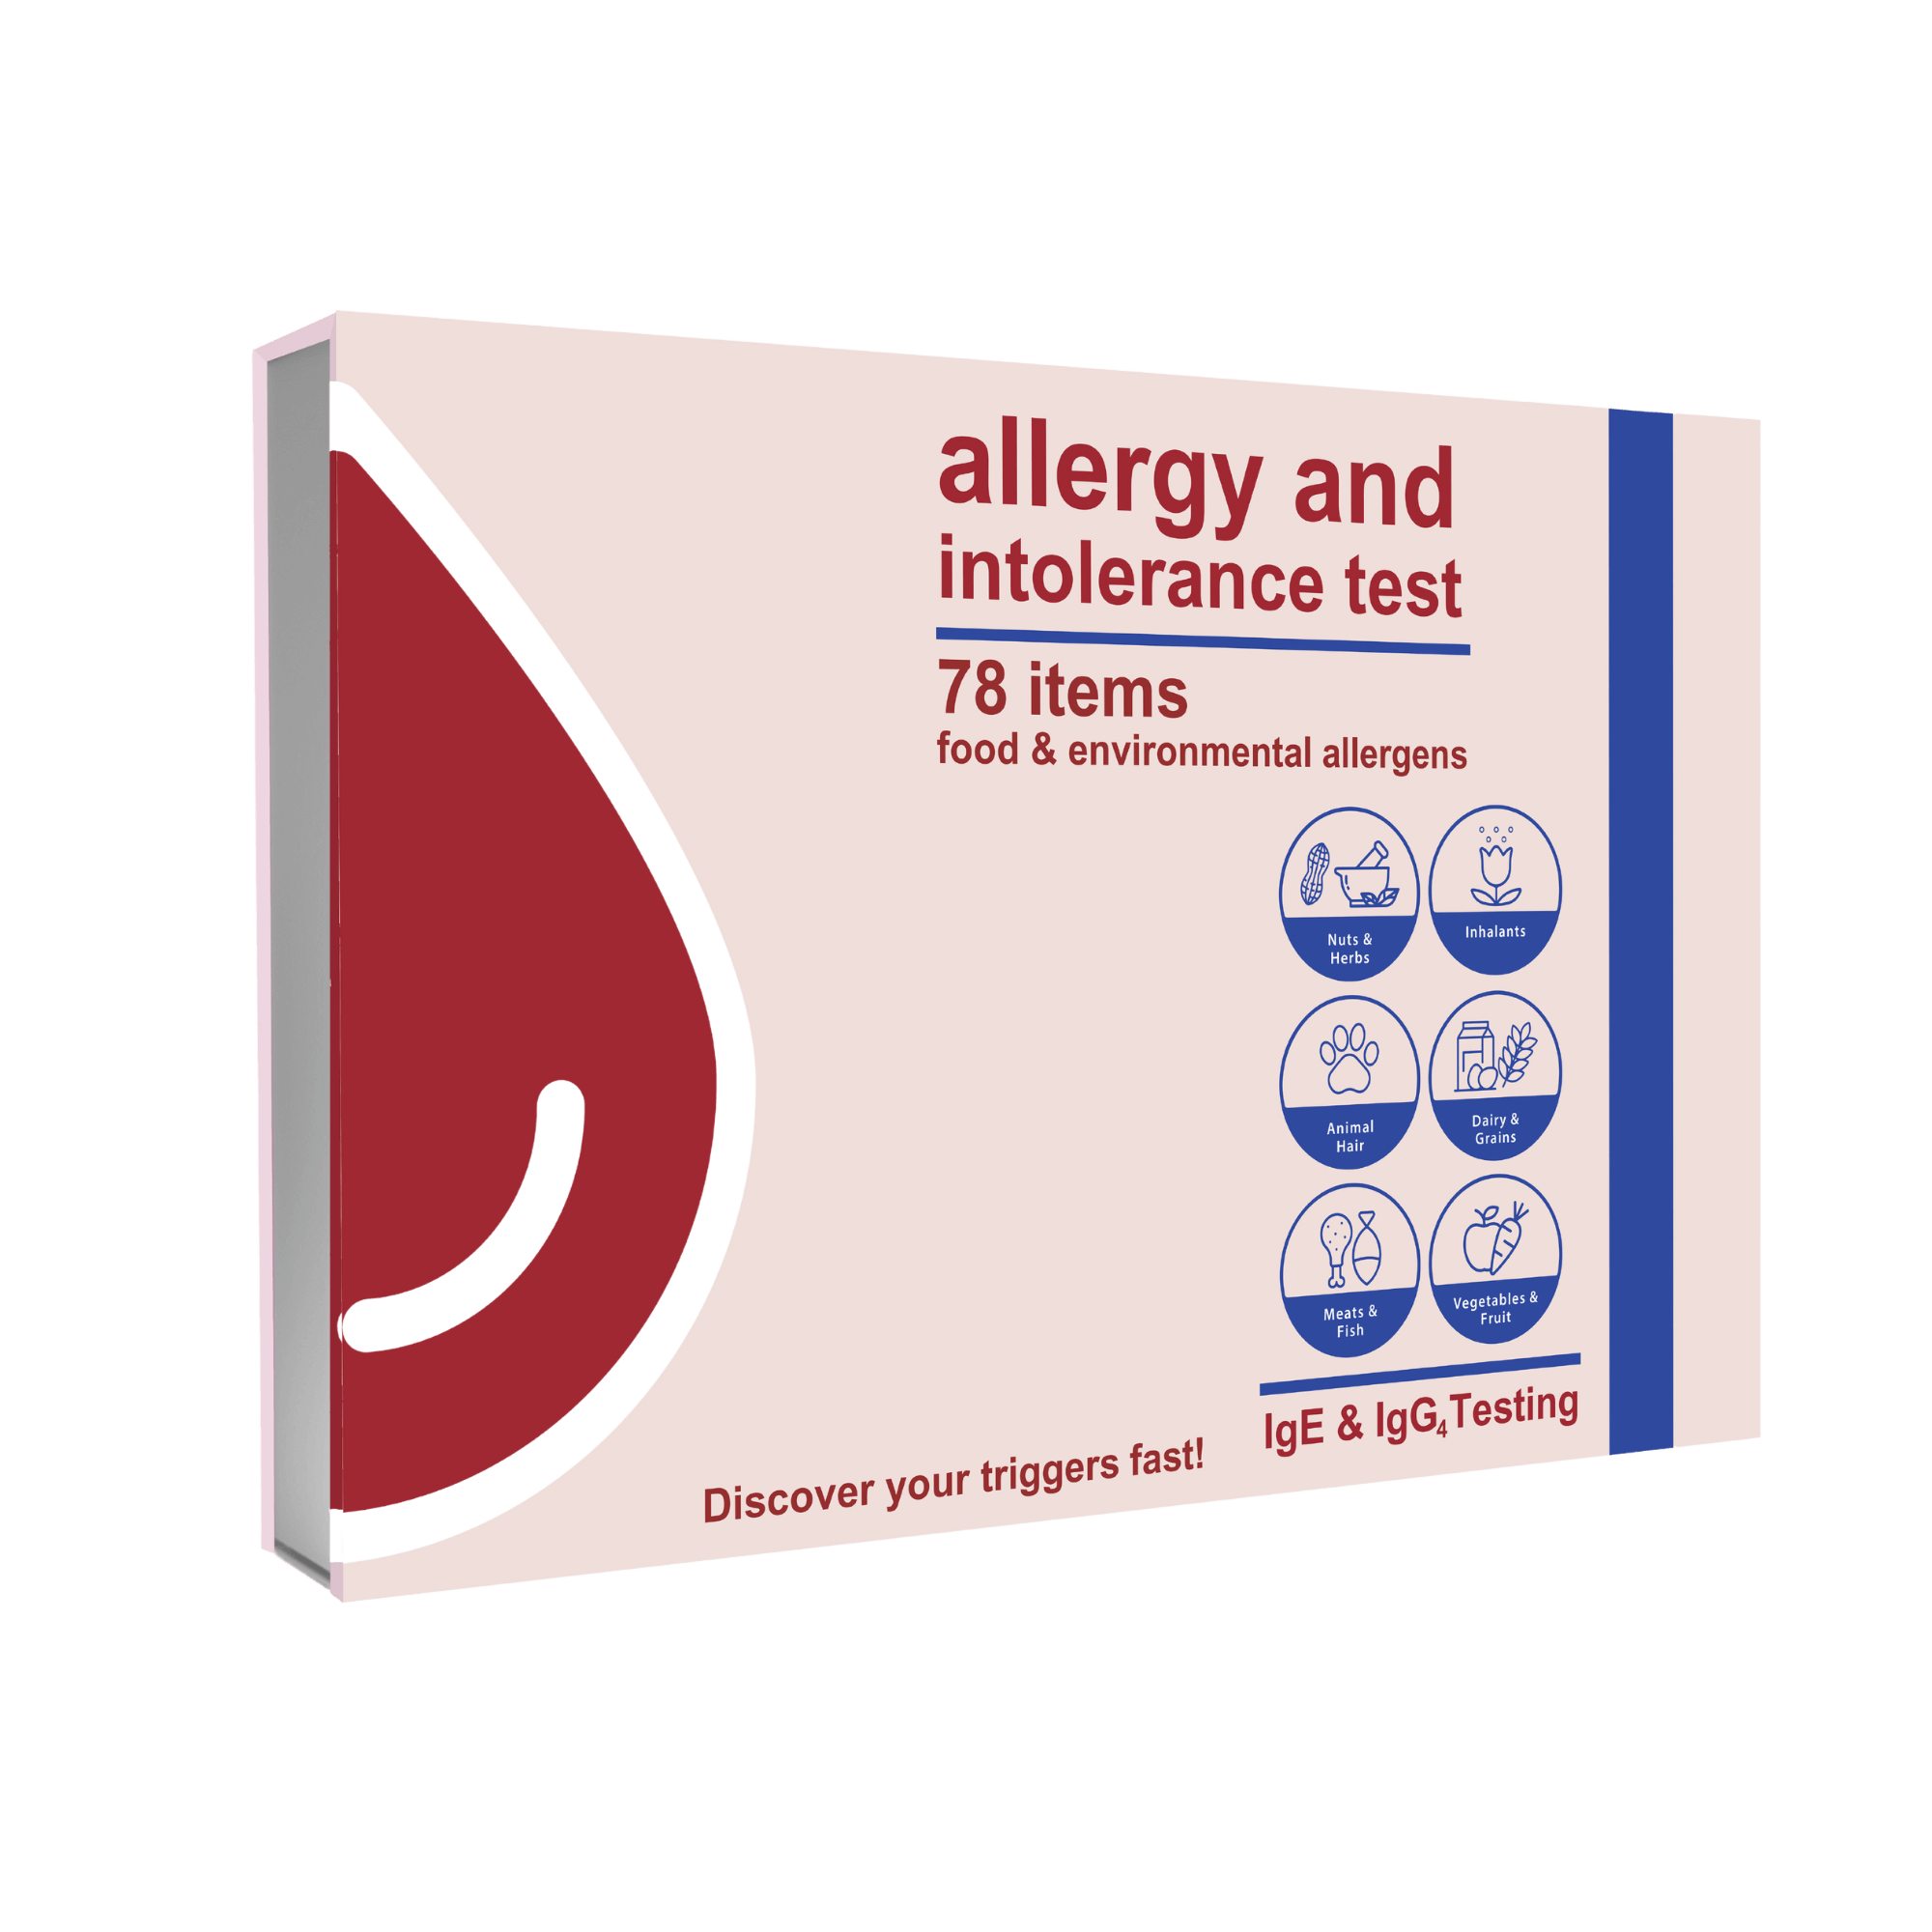 allergy intolerance test - How allergy testing works